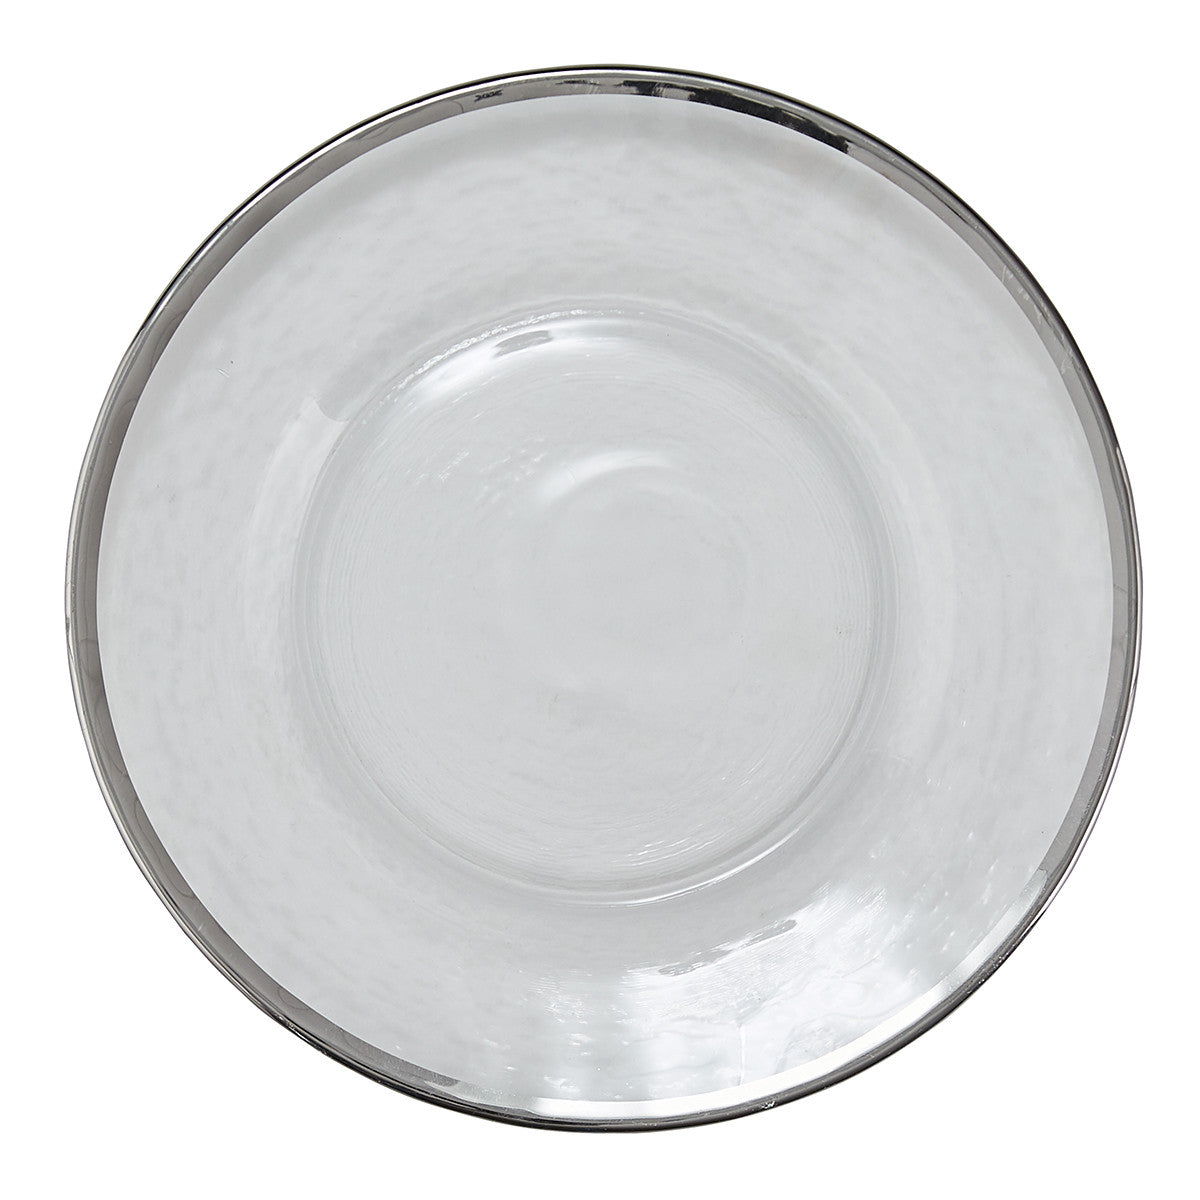 Metallic Rim Glass Salad Plates - Silver Set of 4 Park Designs